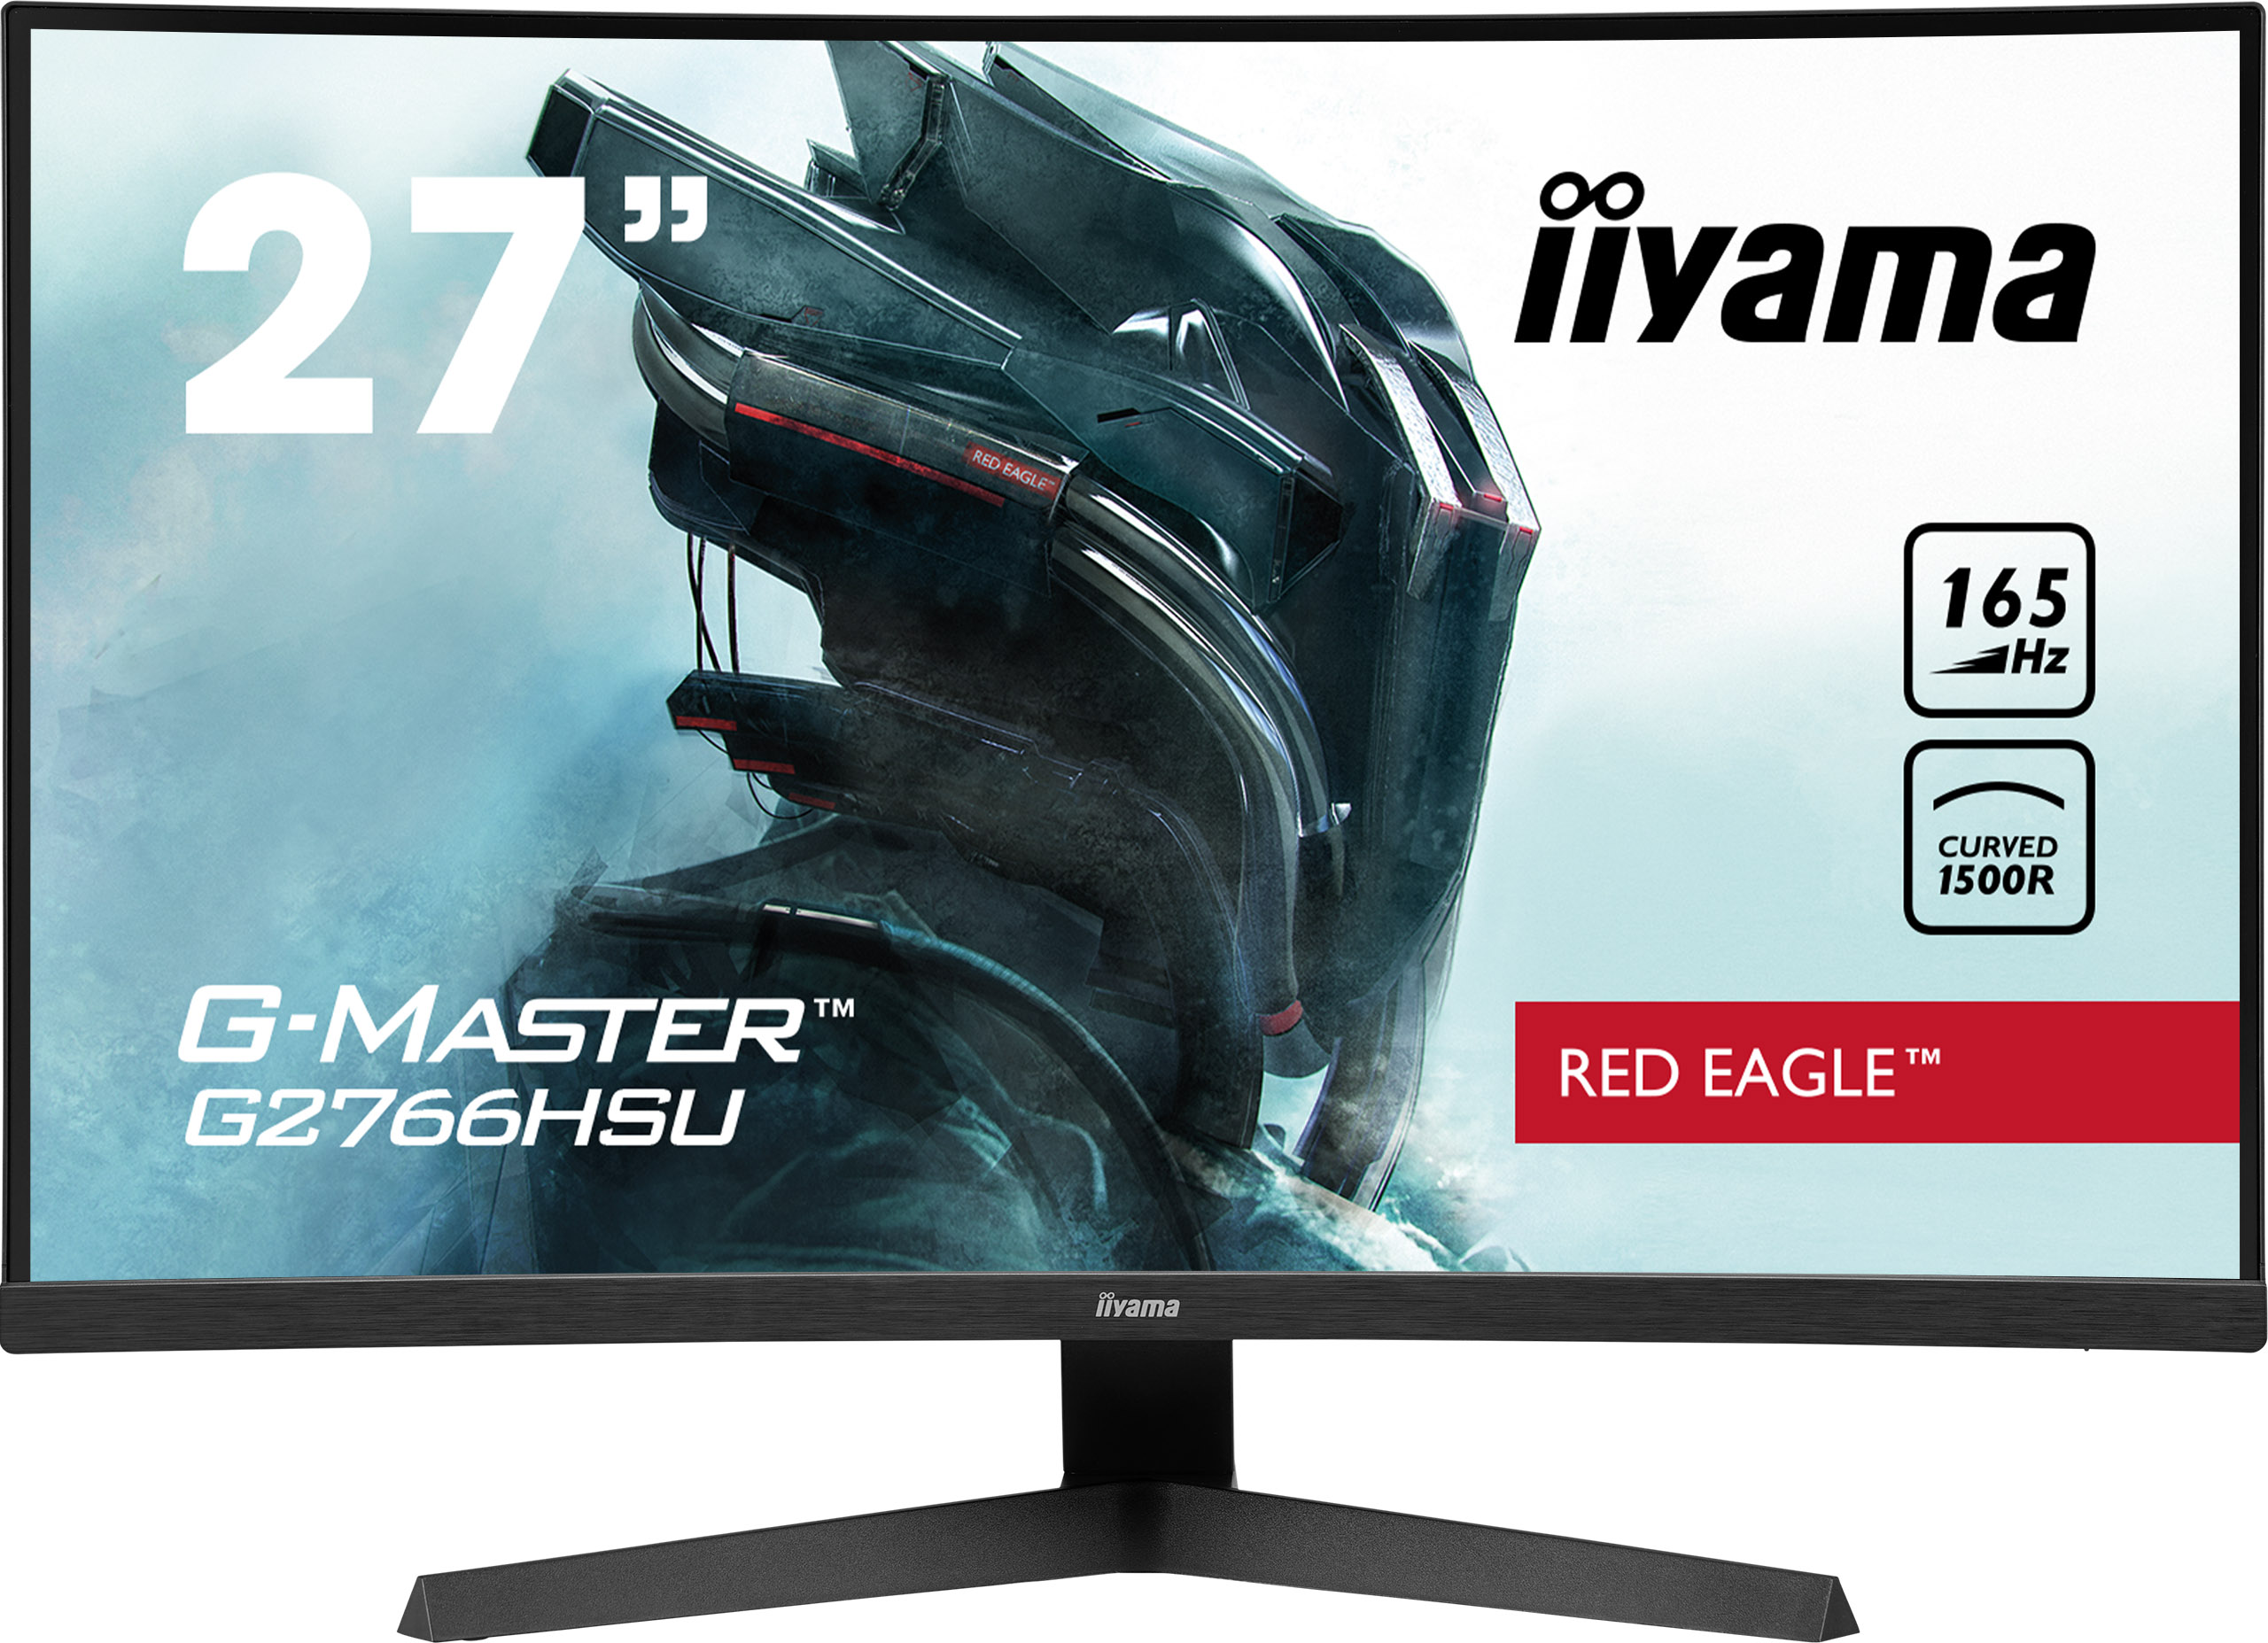 Iiyama G-MASTER G2766HSU-B1 RED EAGLE | 27" | 165Hz | Curved-Gaming Monitor